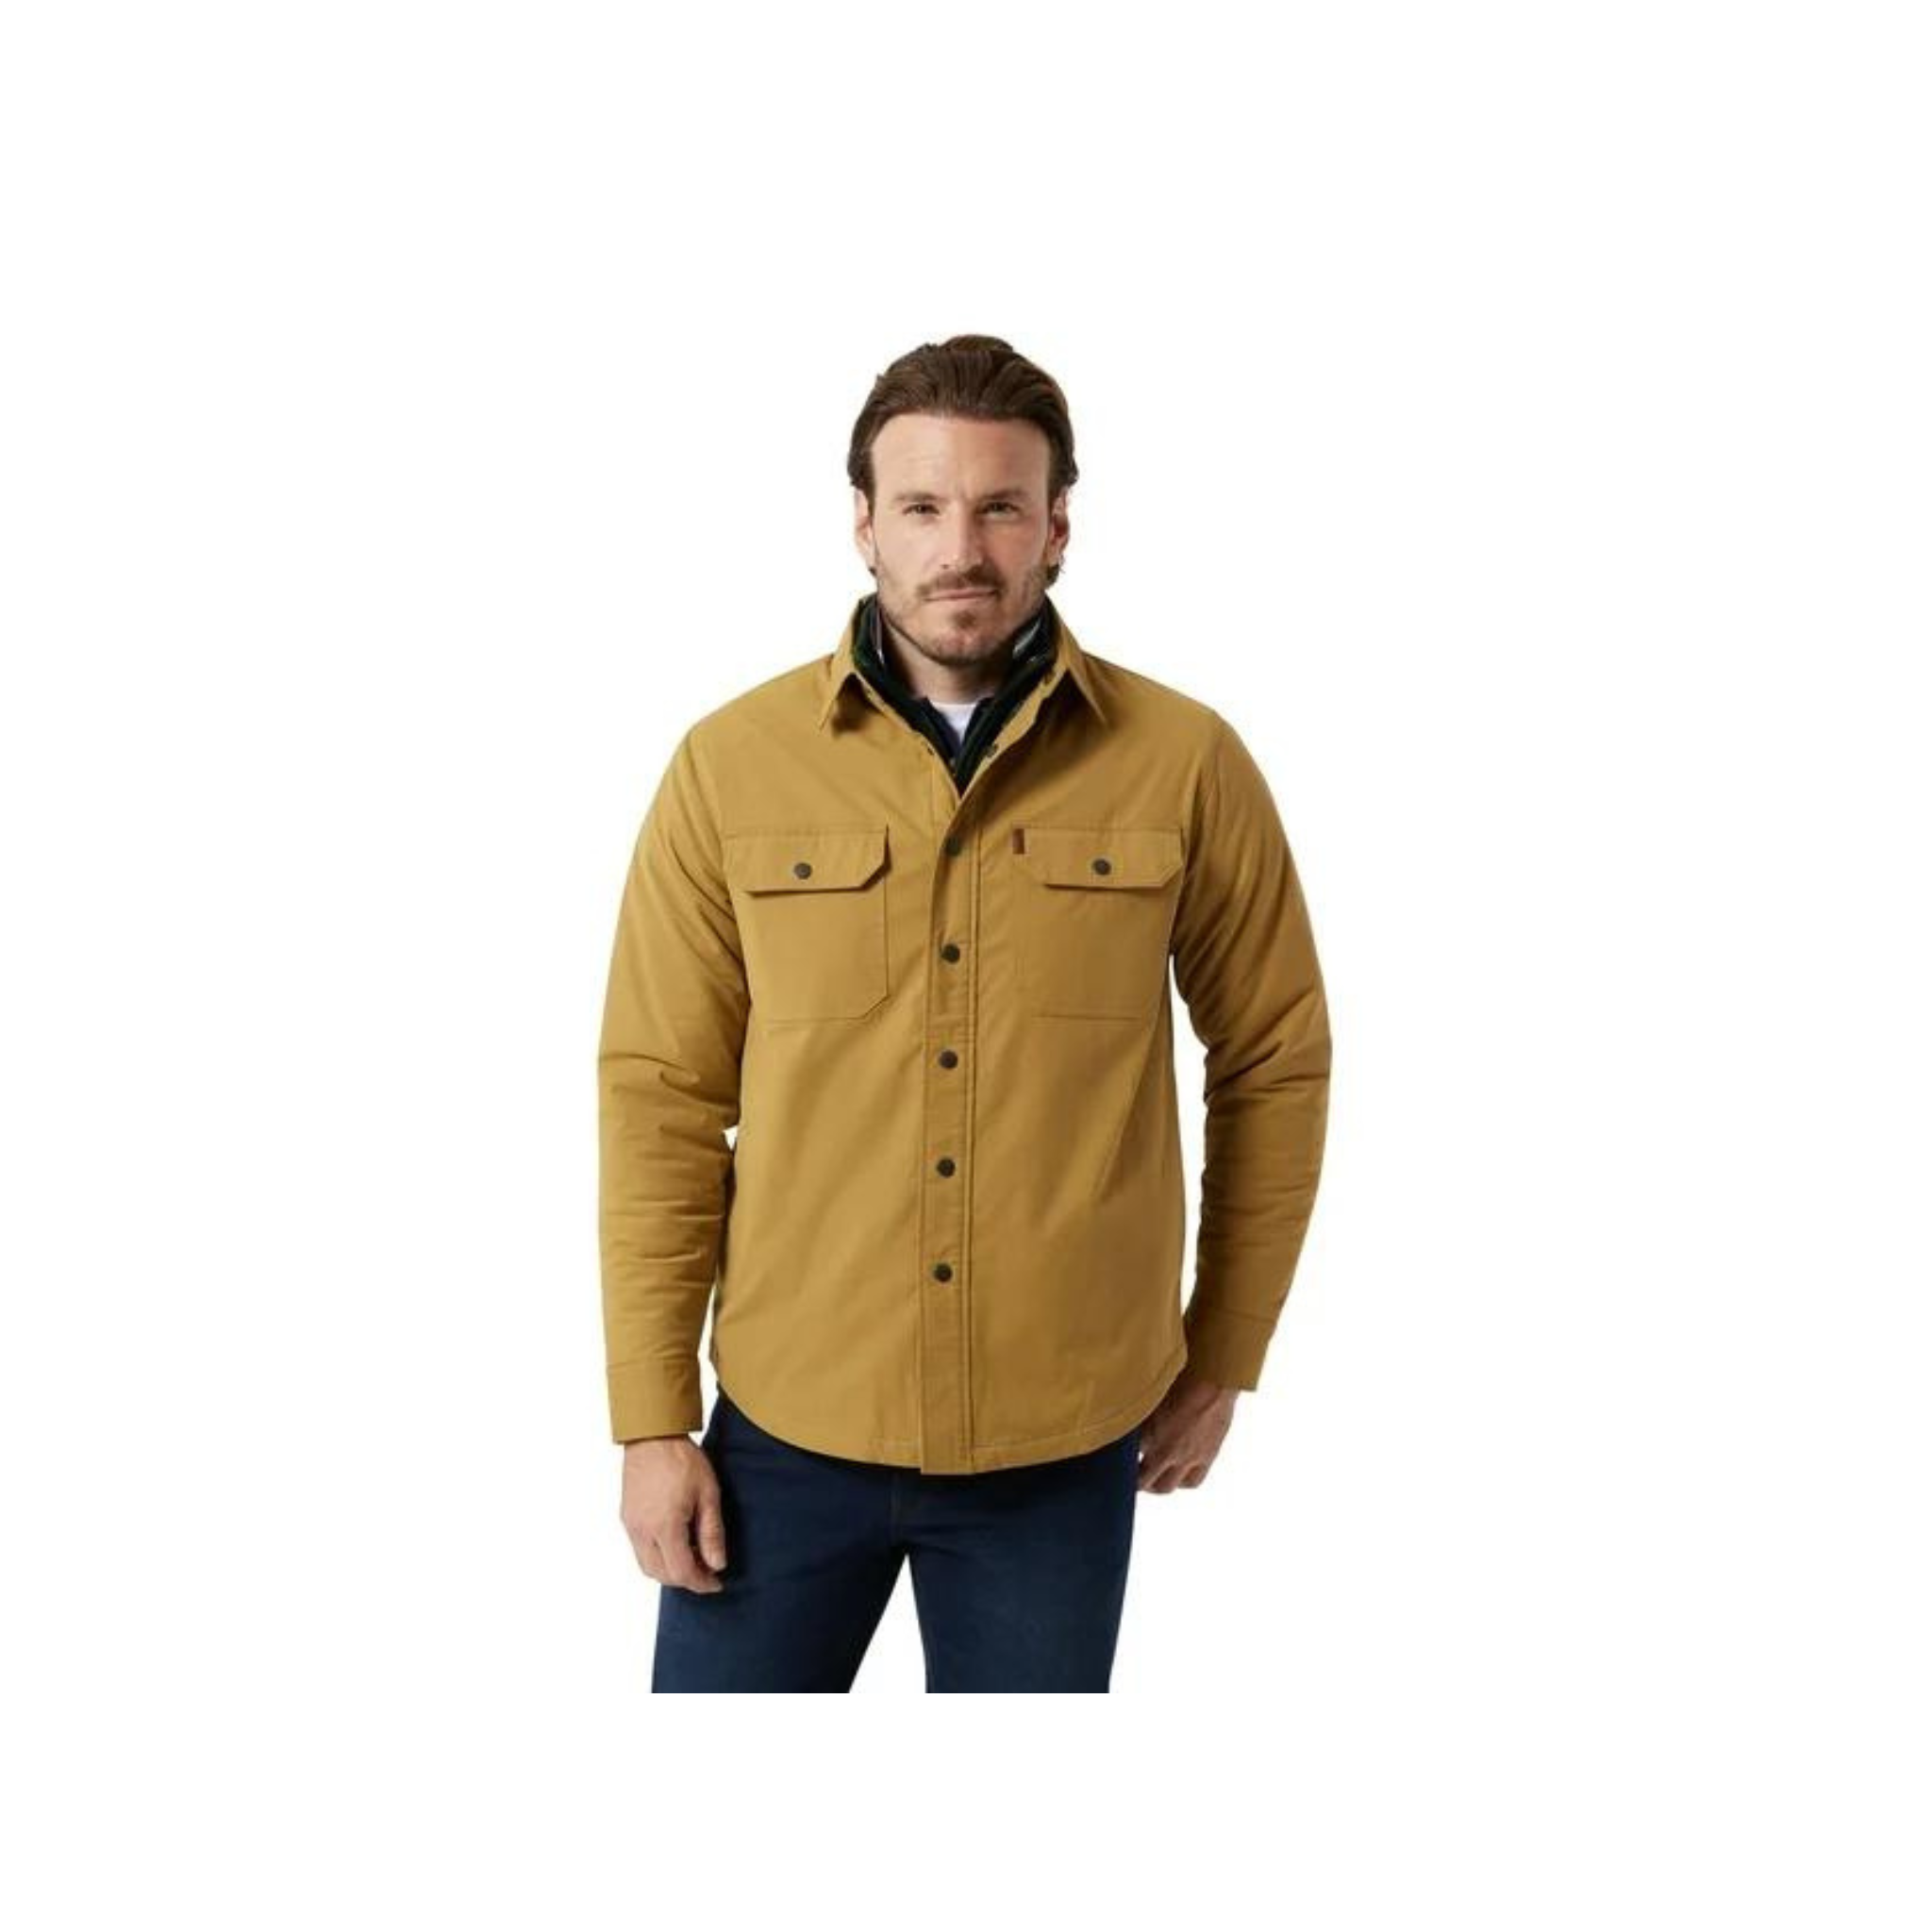 Chaps Men's Fleece-Lined Jackets (Various Colors)